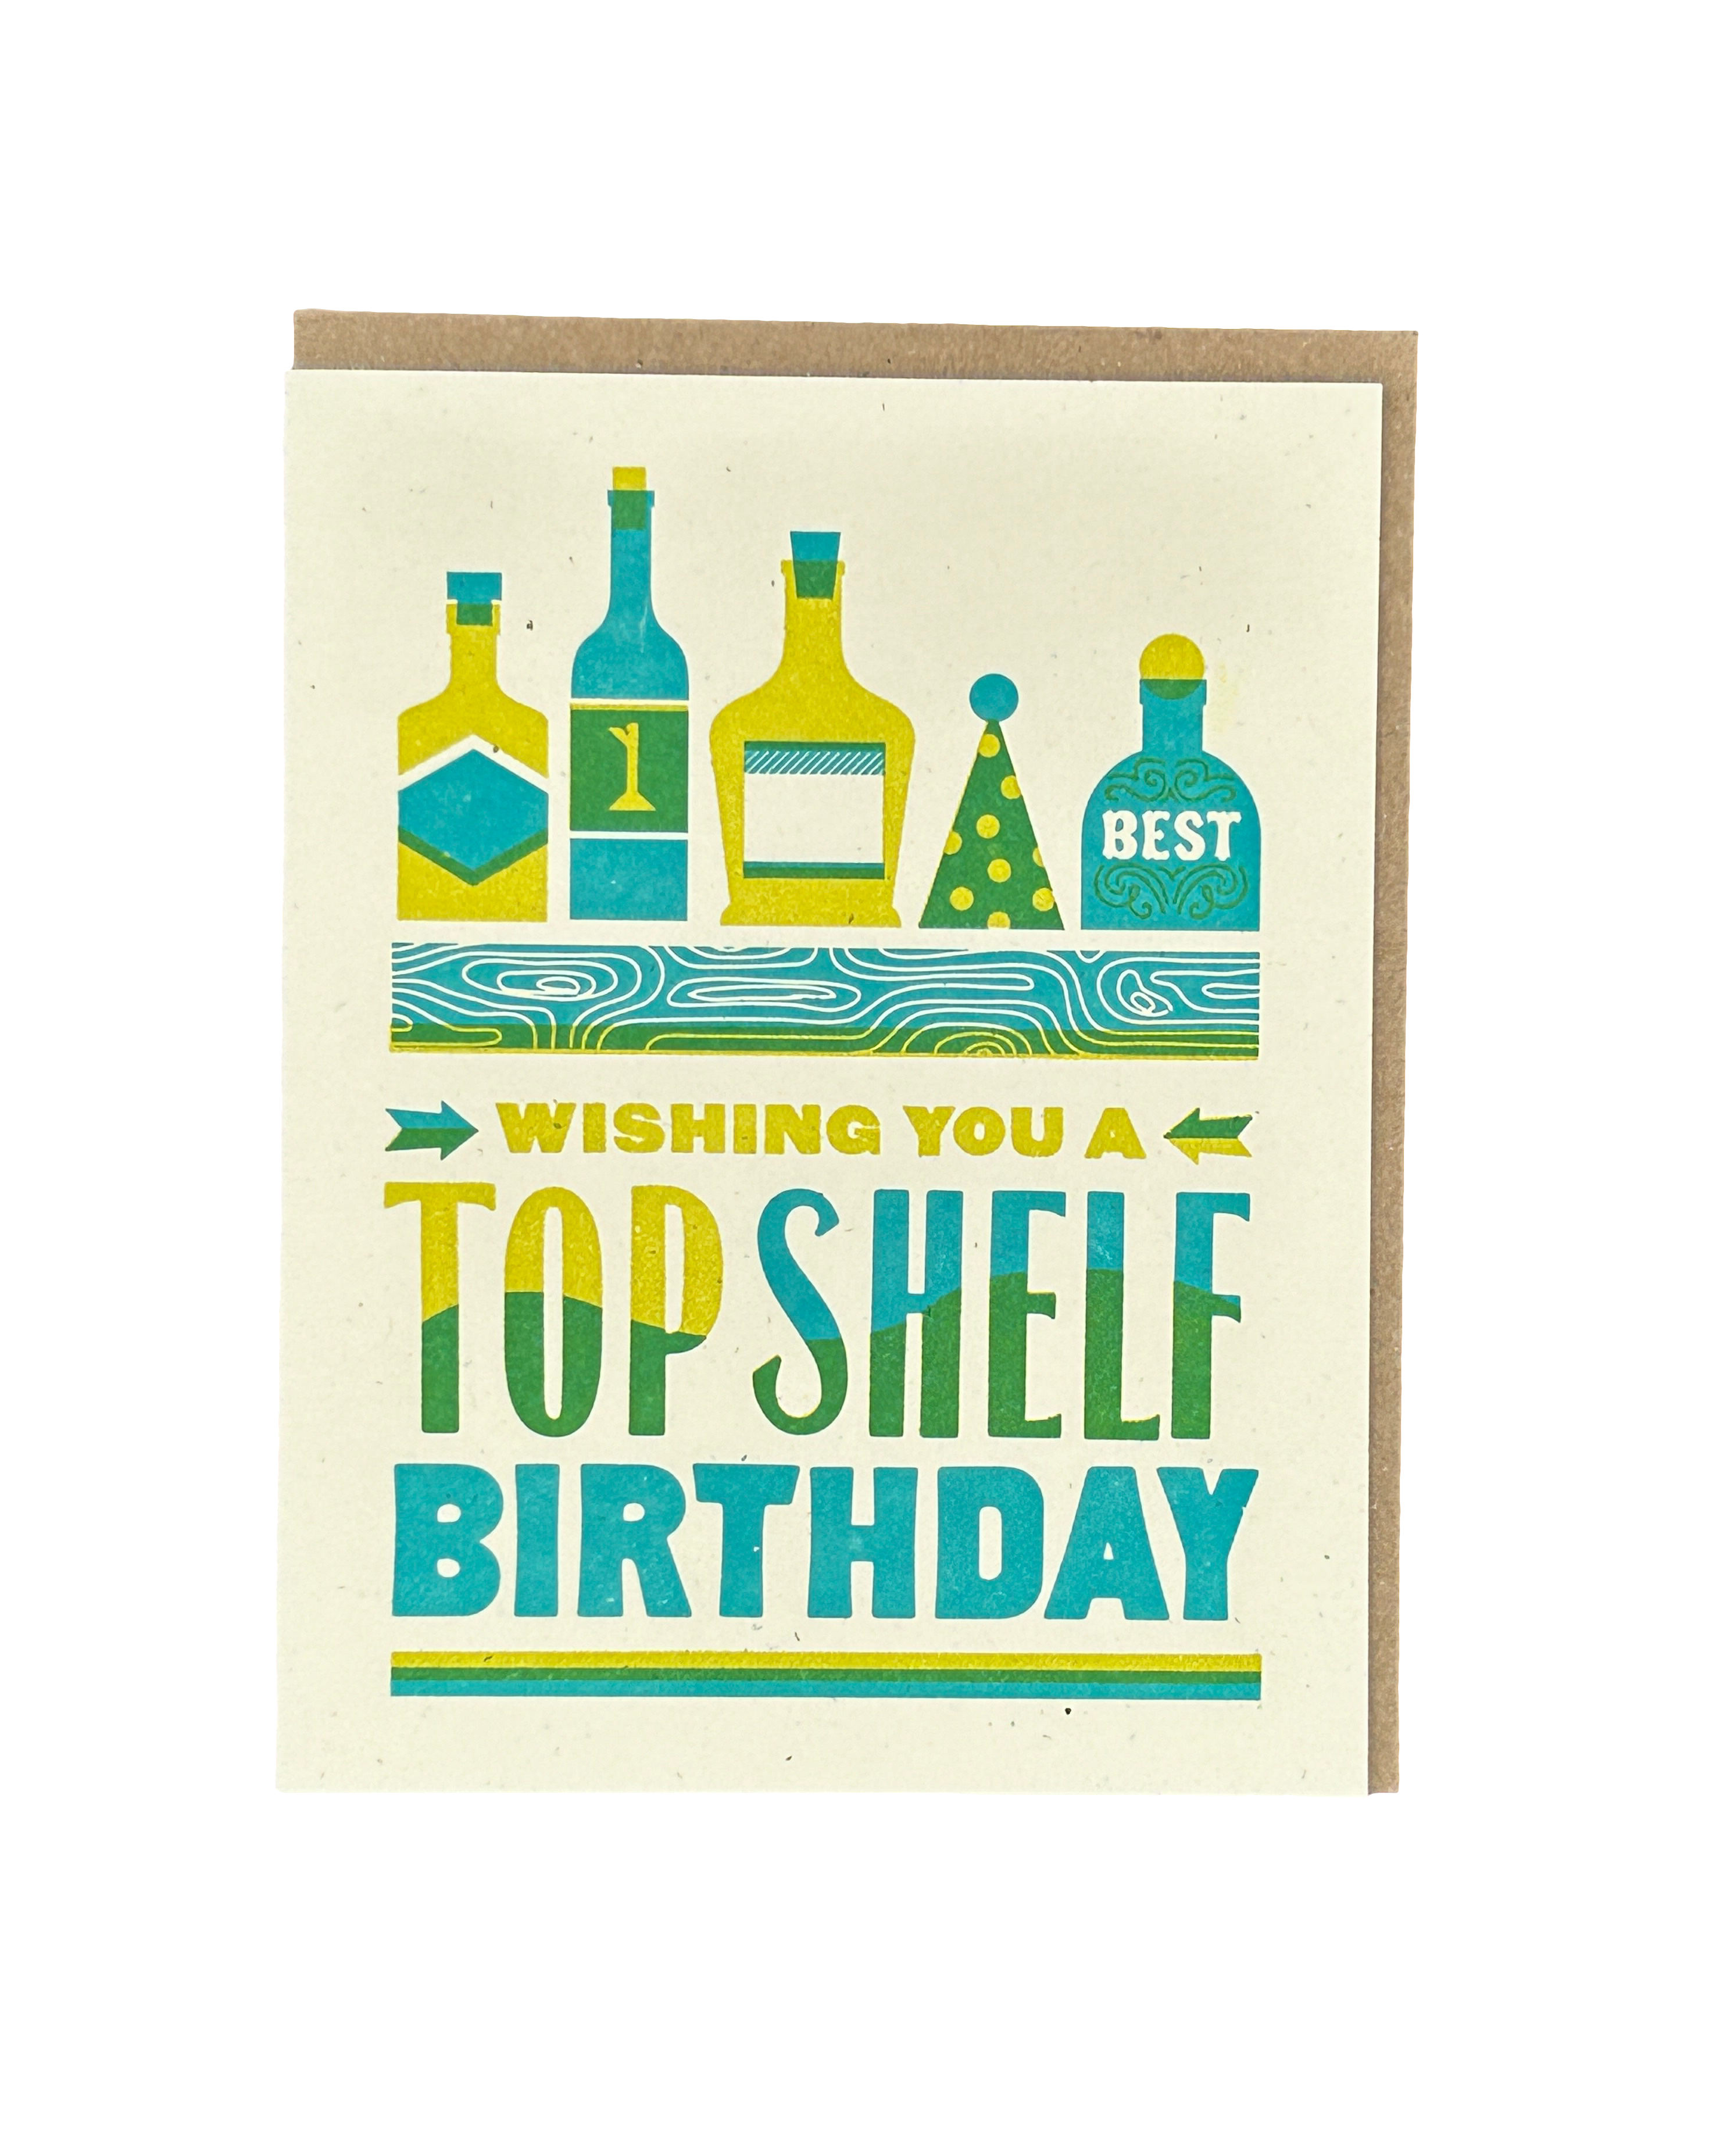 Top Shelf Birthday Letterpress Card